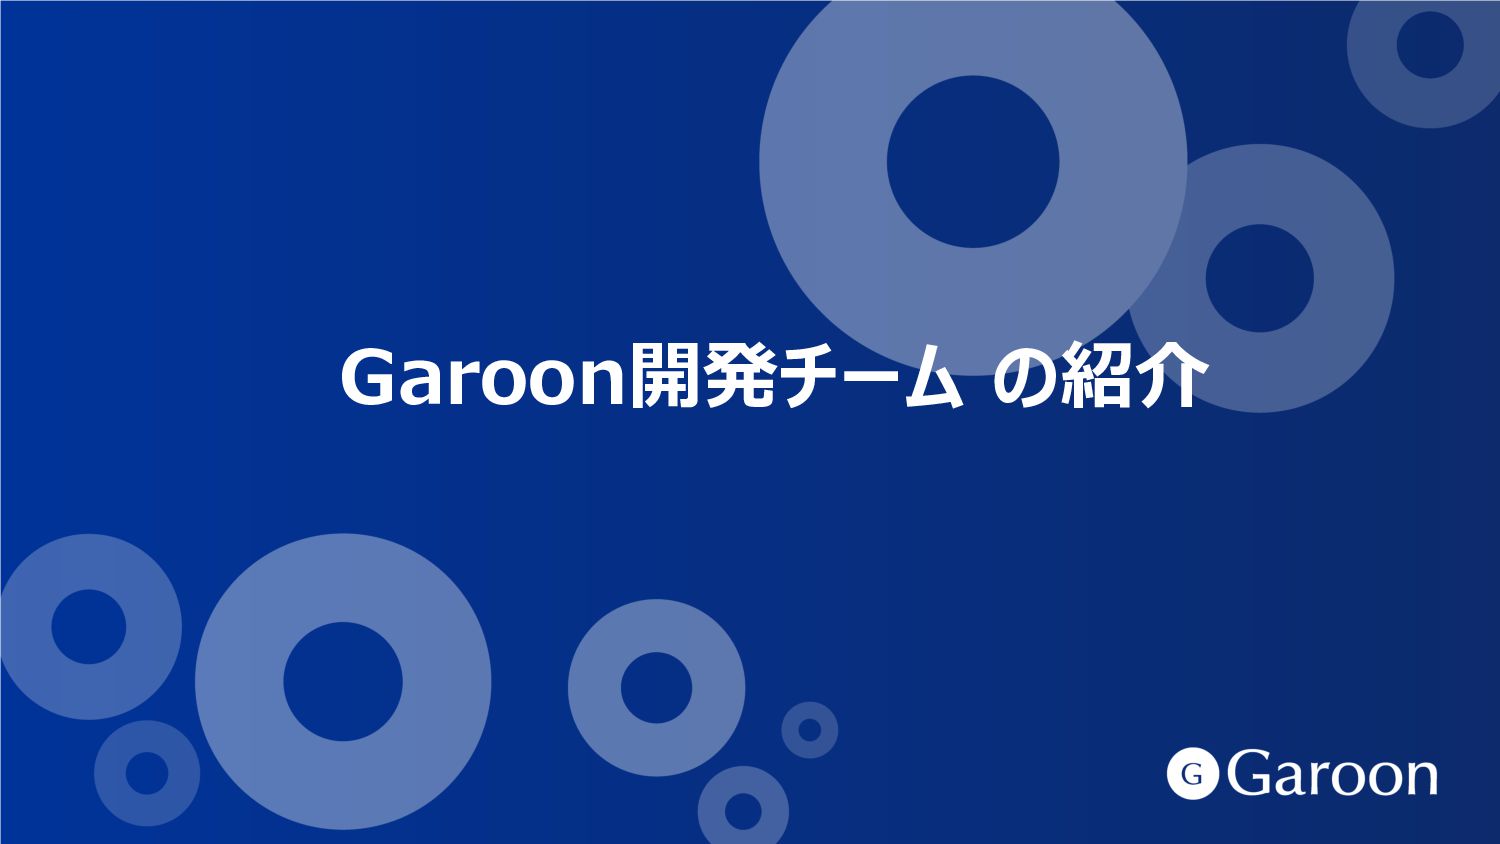 Slide Top:  Garoon 開発チーム / Garoon development team